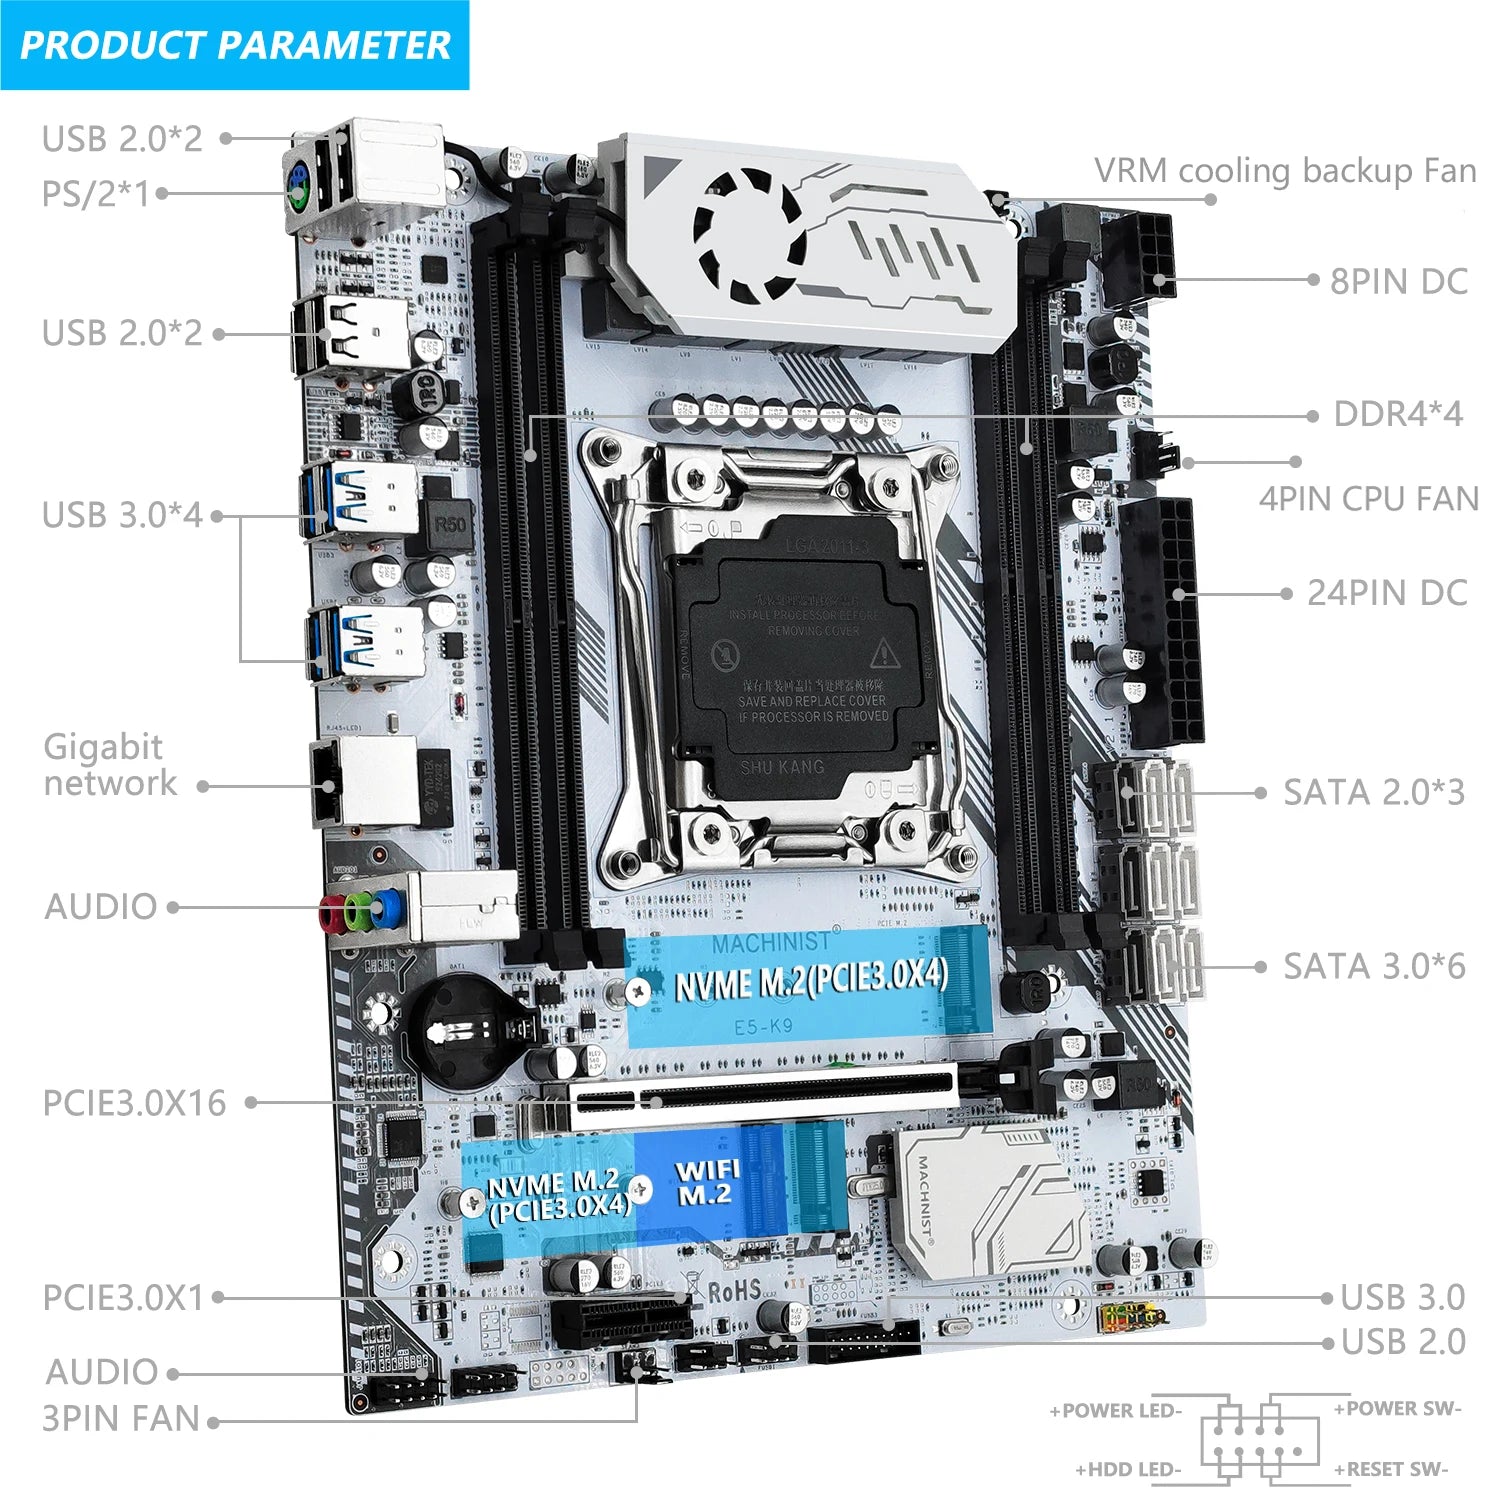 Machinist LGA 2011-3 Intel Xeon E5 2630 V4 Desktop Motherboard Set